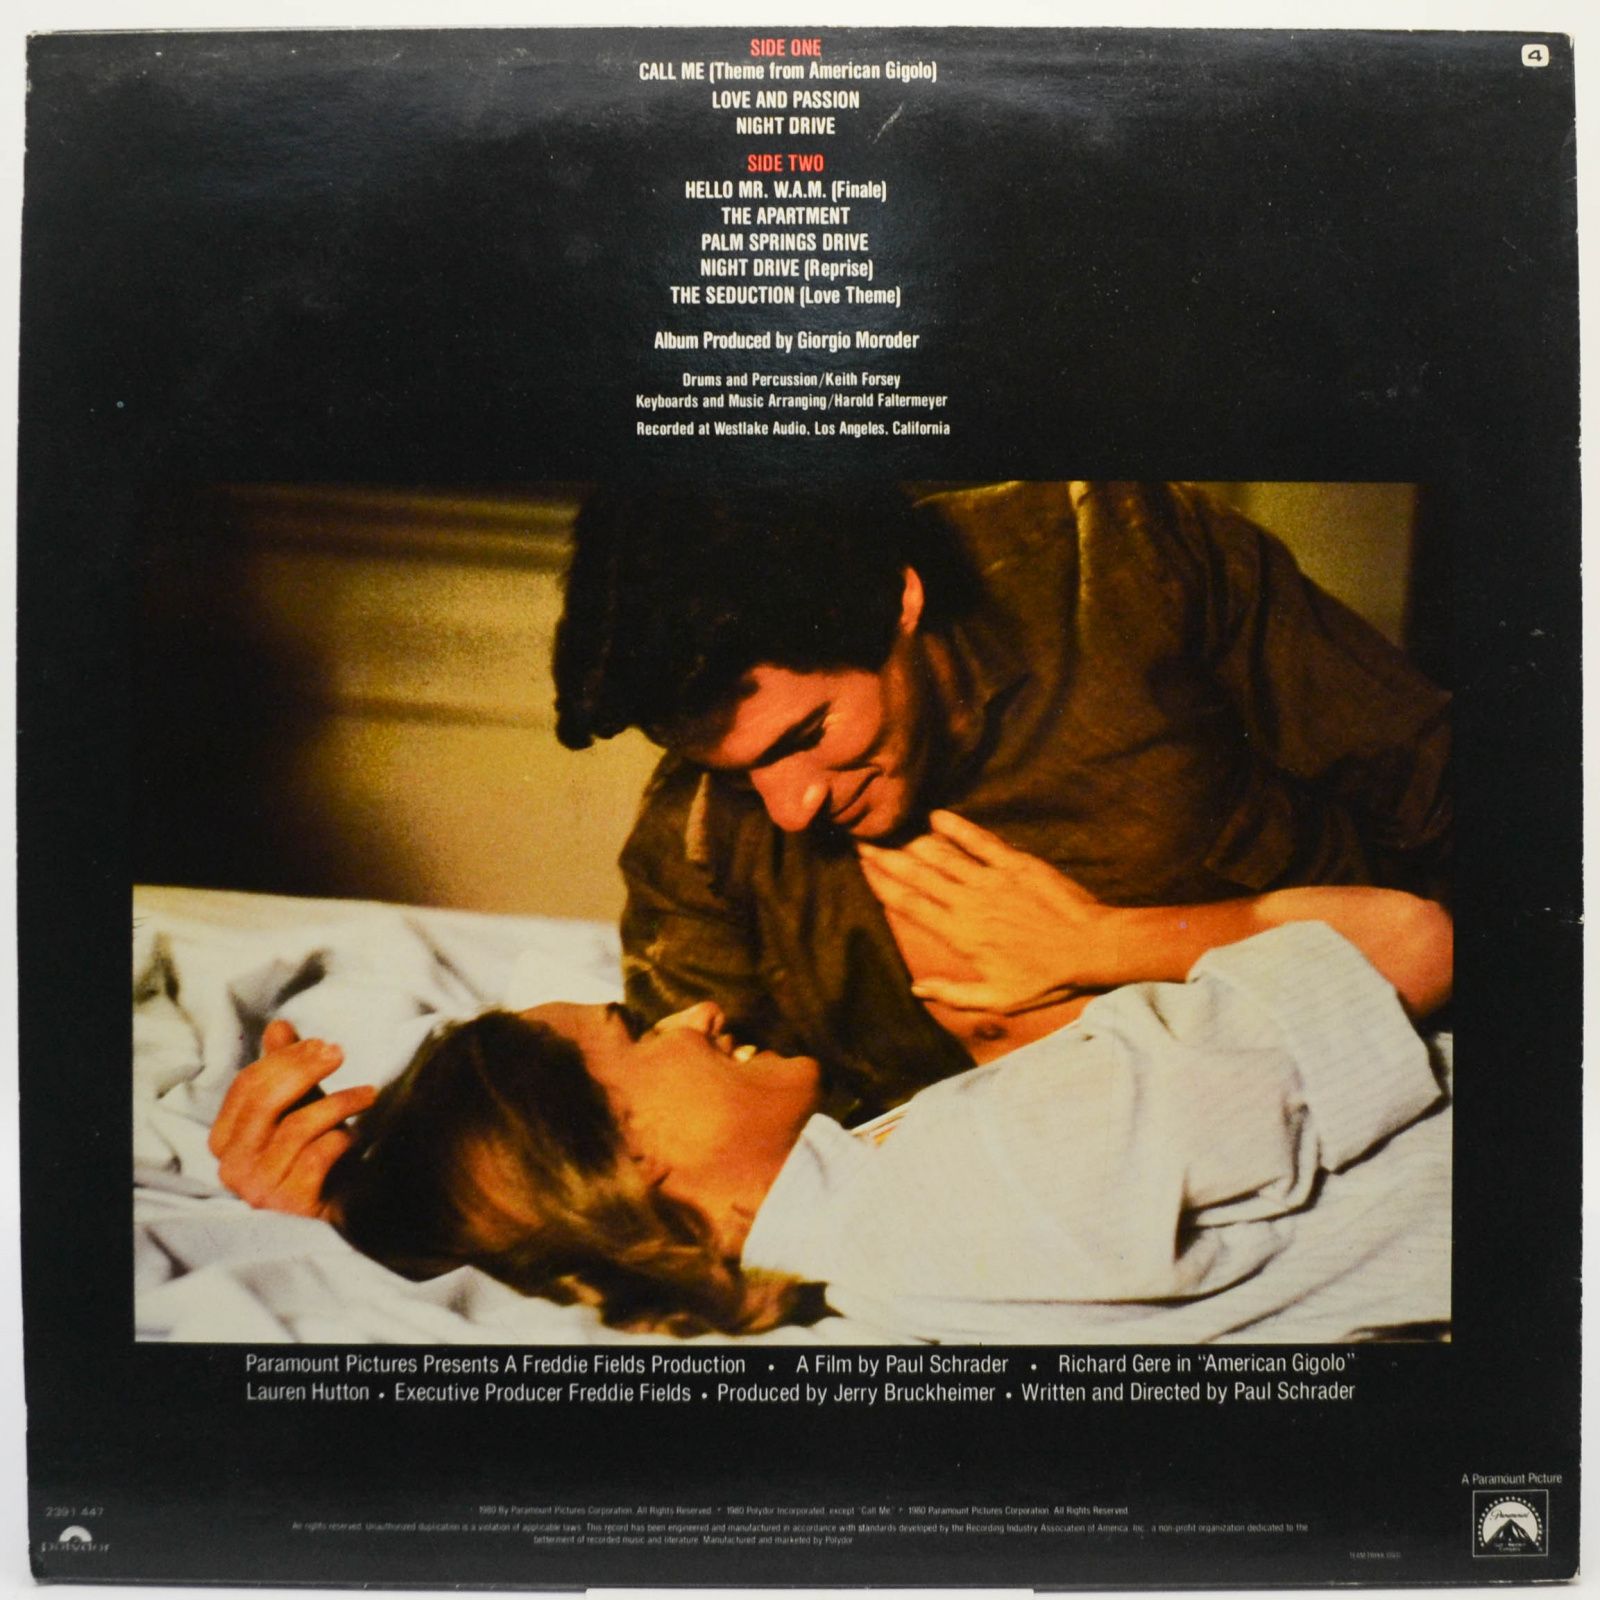 Giorgio Moroder — American Gigolo (Original Soundtrack Recording), 1980